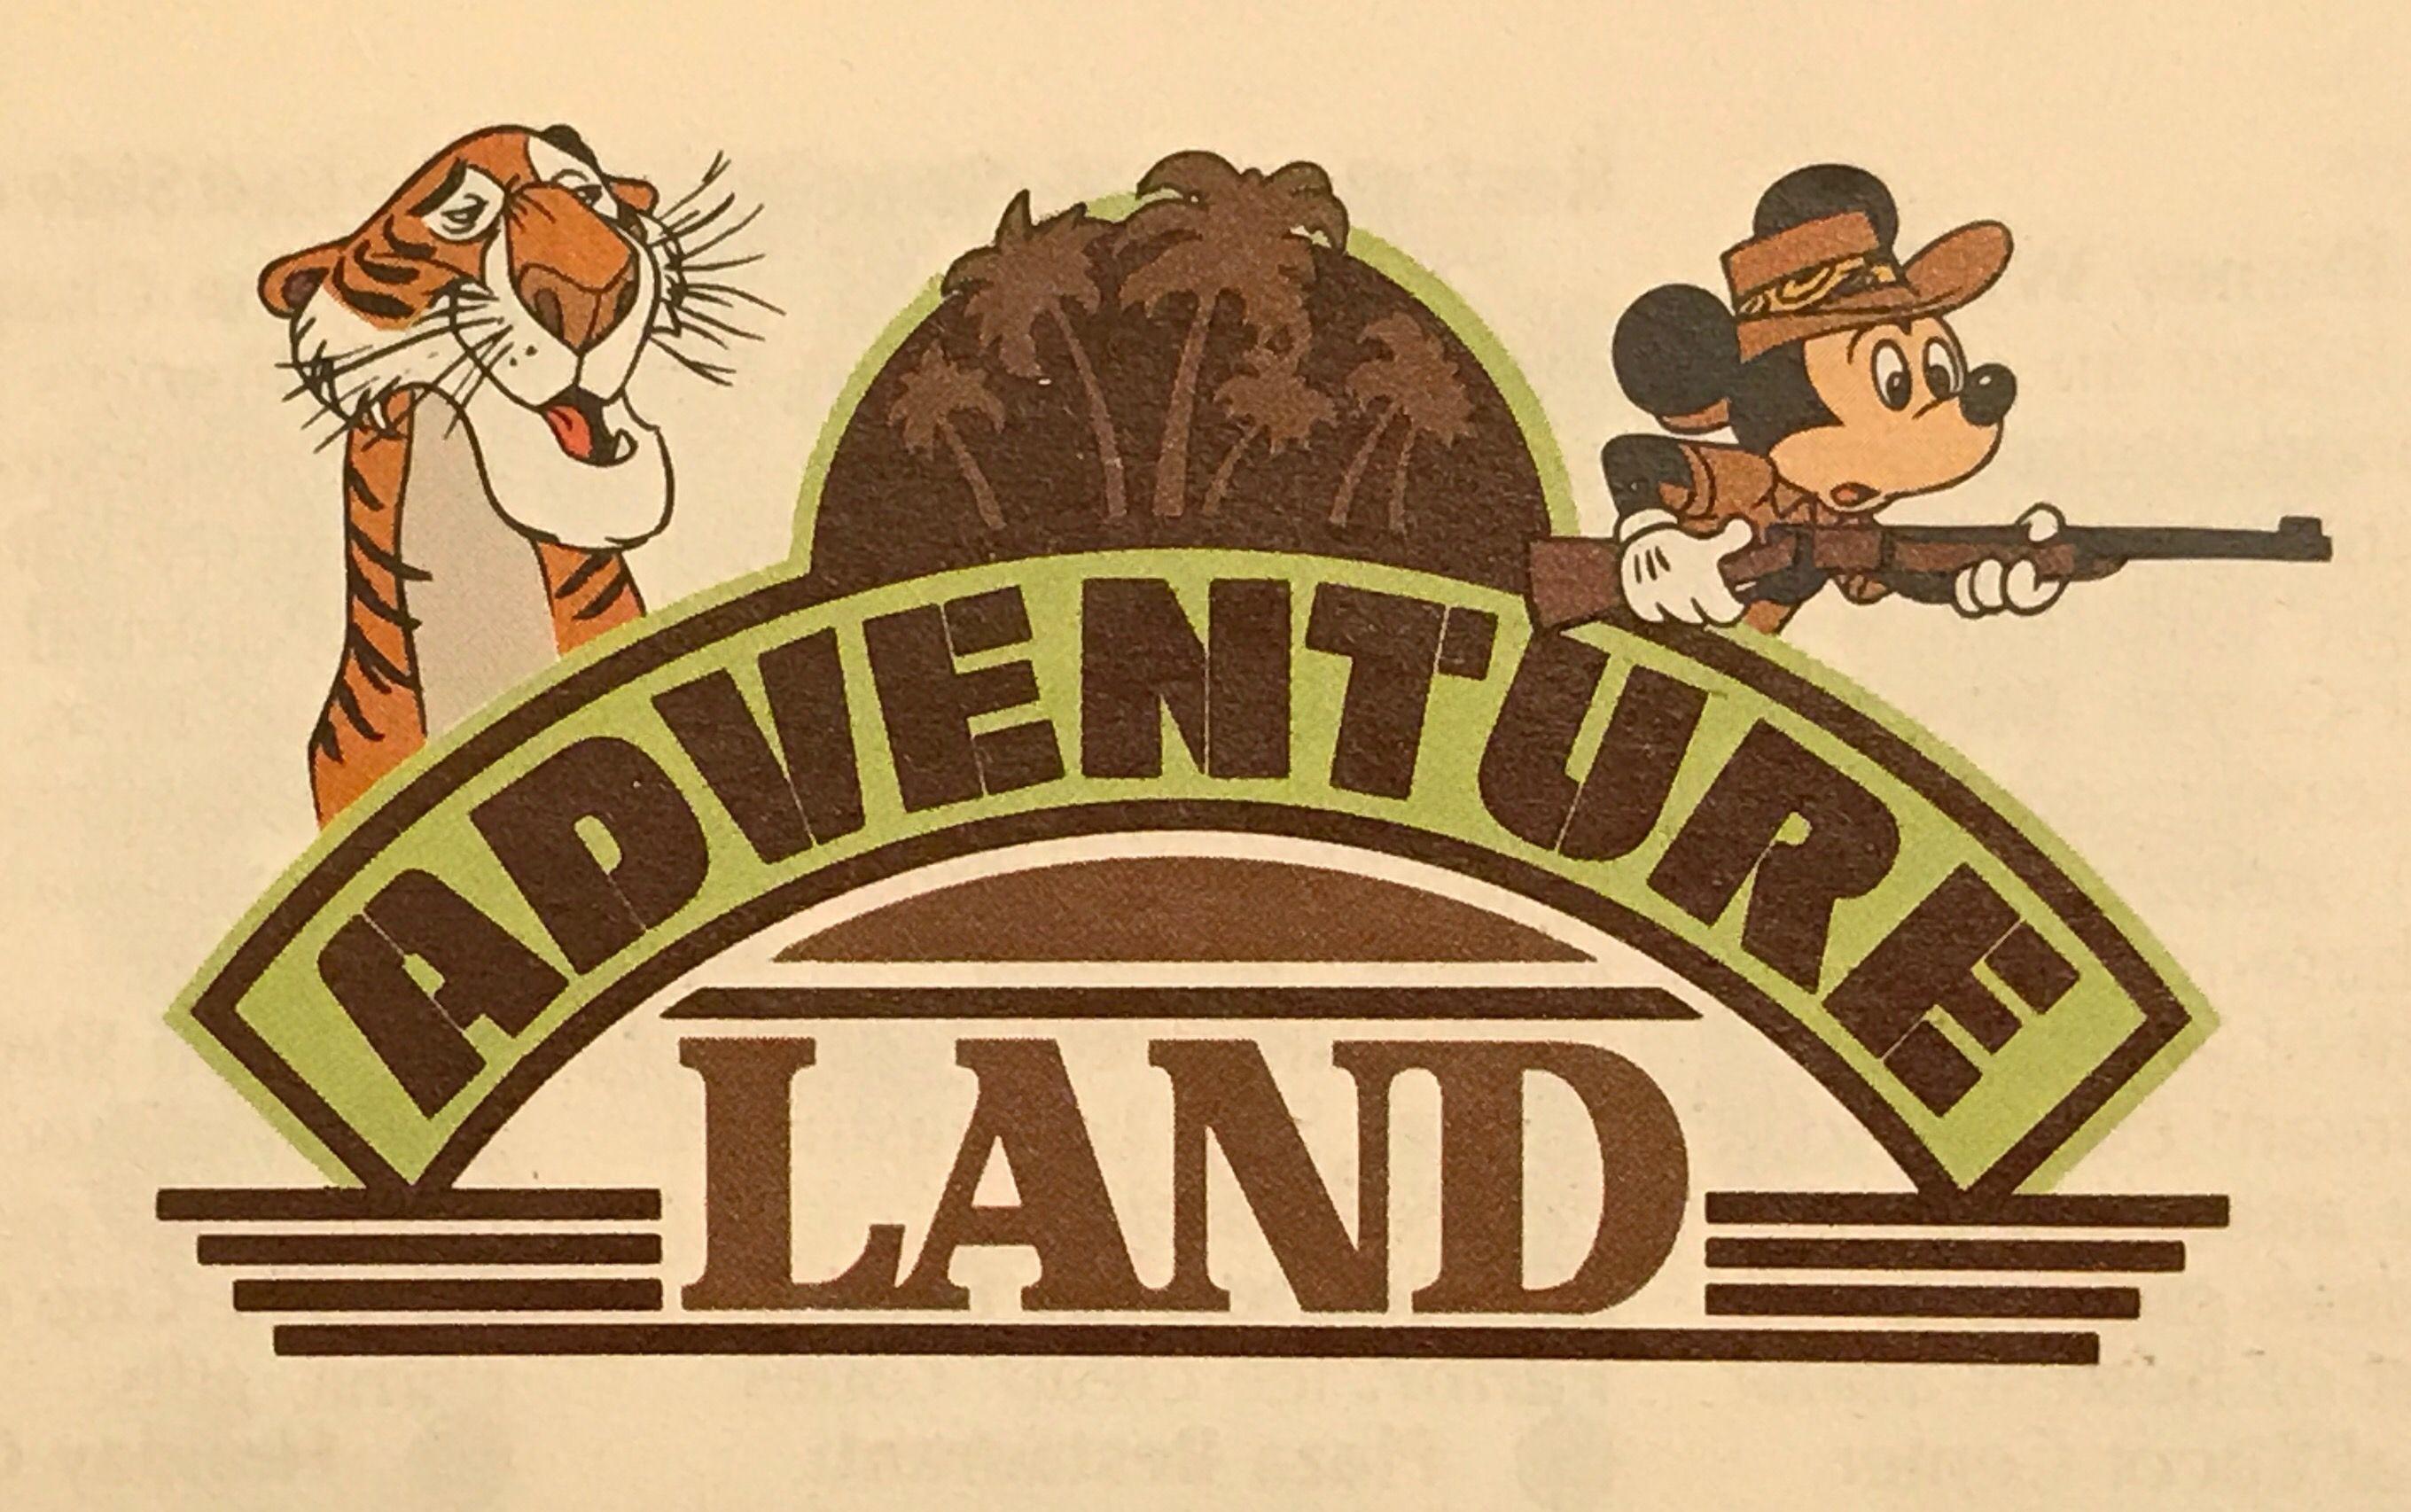 Adventureland Logo - Vintage Adventureland logo. Magic Kingdom Attractions in Walt